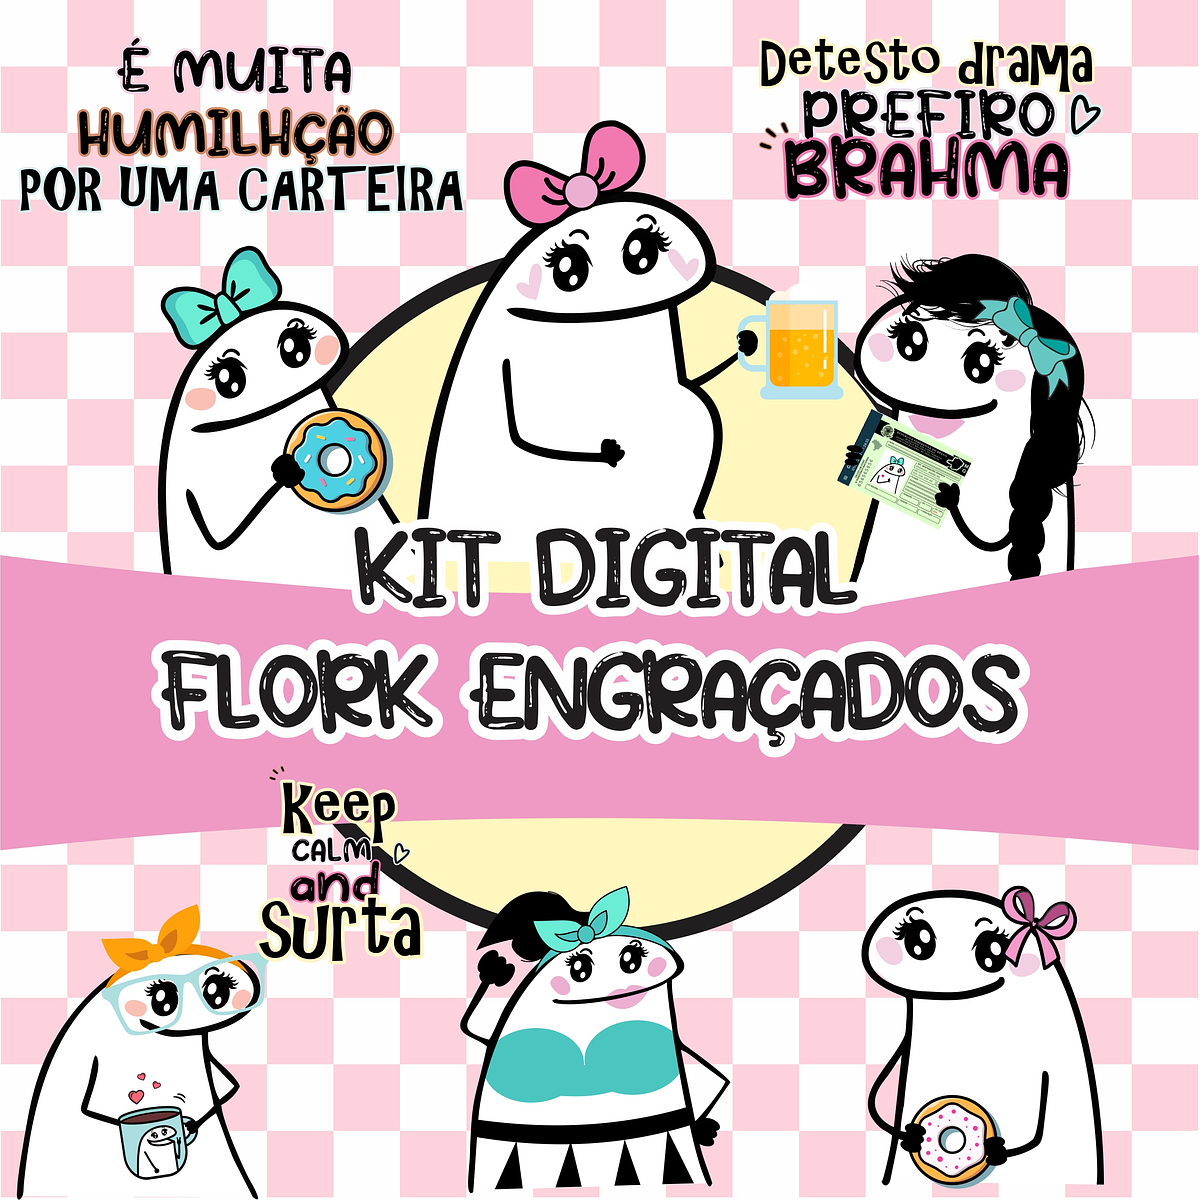 Kit Florks / Meme Bento Personalizados